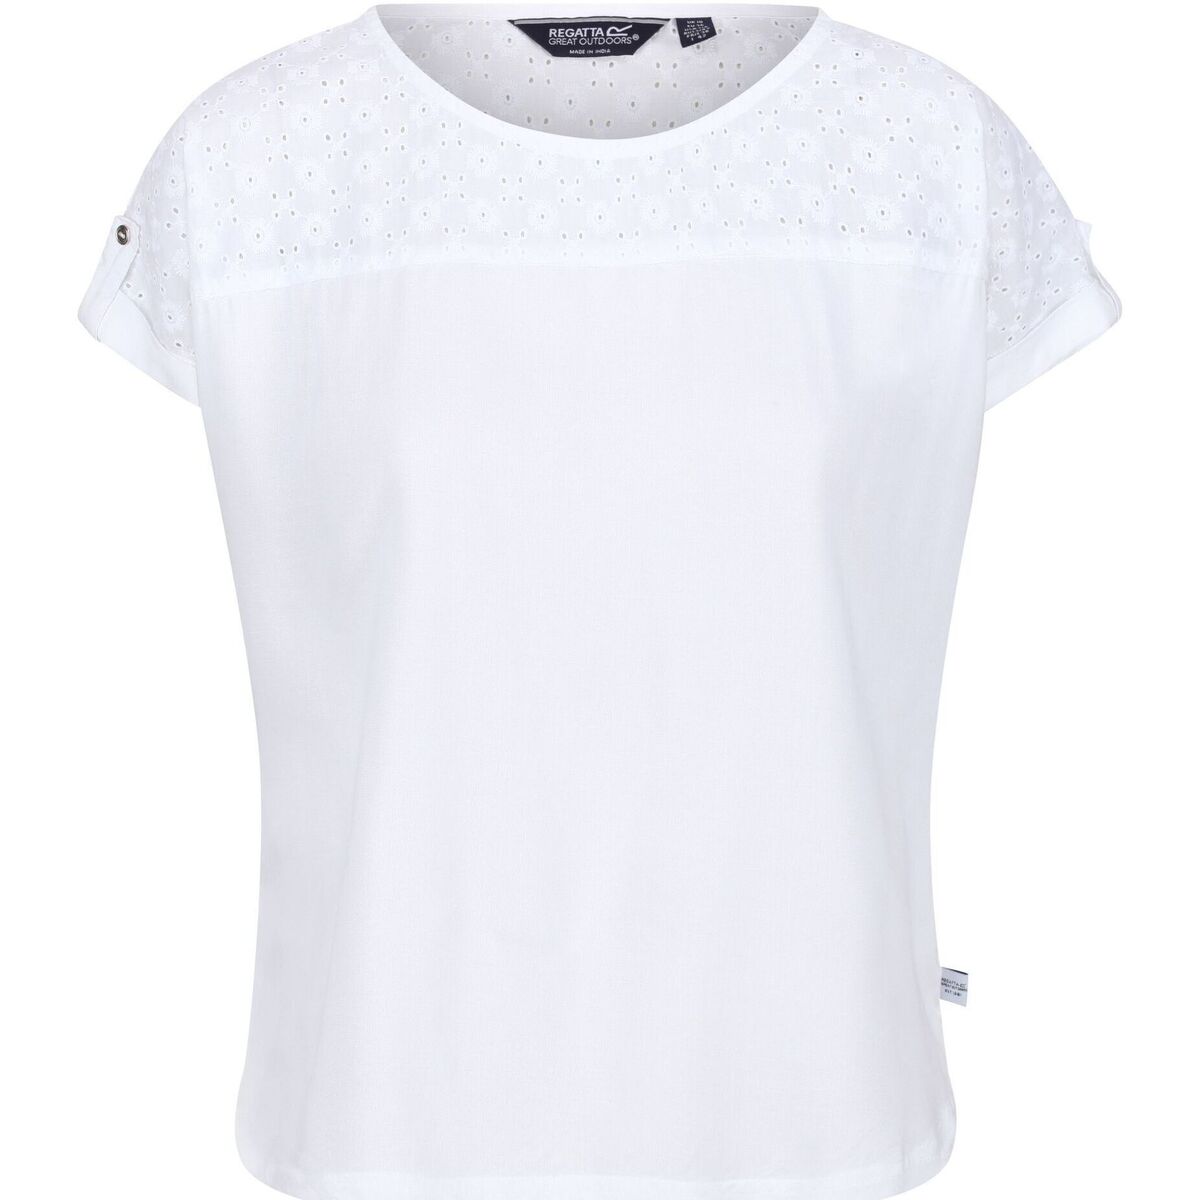 textil Mujer Camisetas manga larga Regatta Jaida Blanco